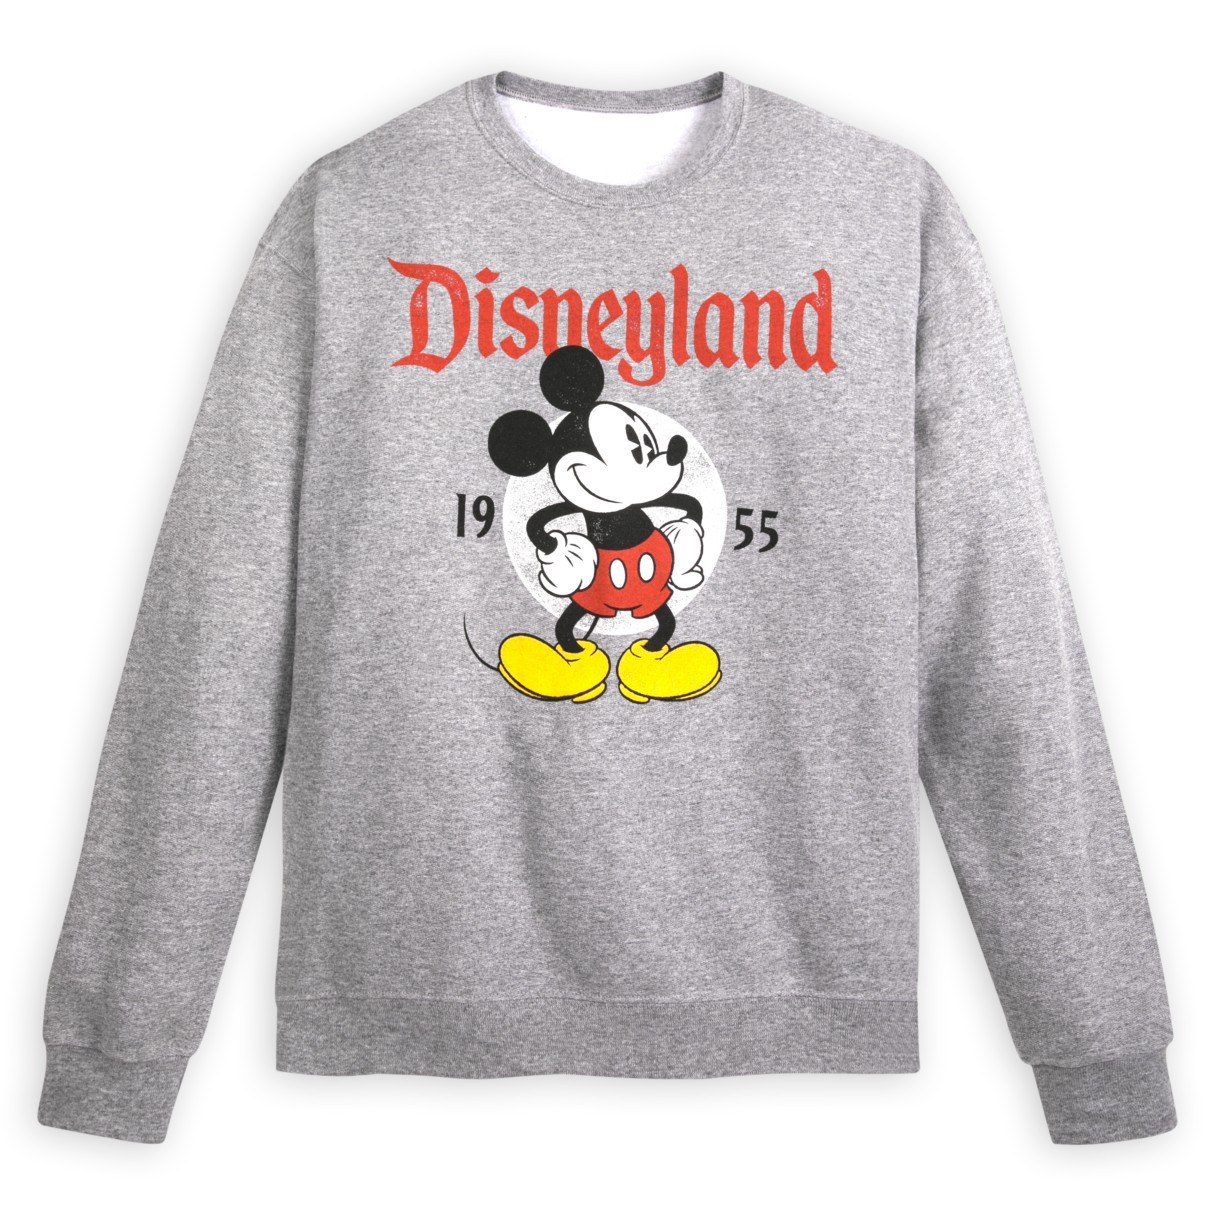 Mickey Mouse Sweatshirt for Adults – Disneyland